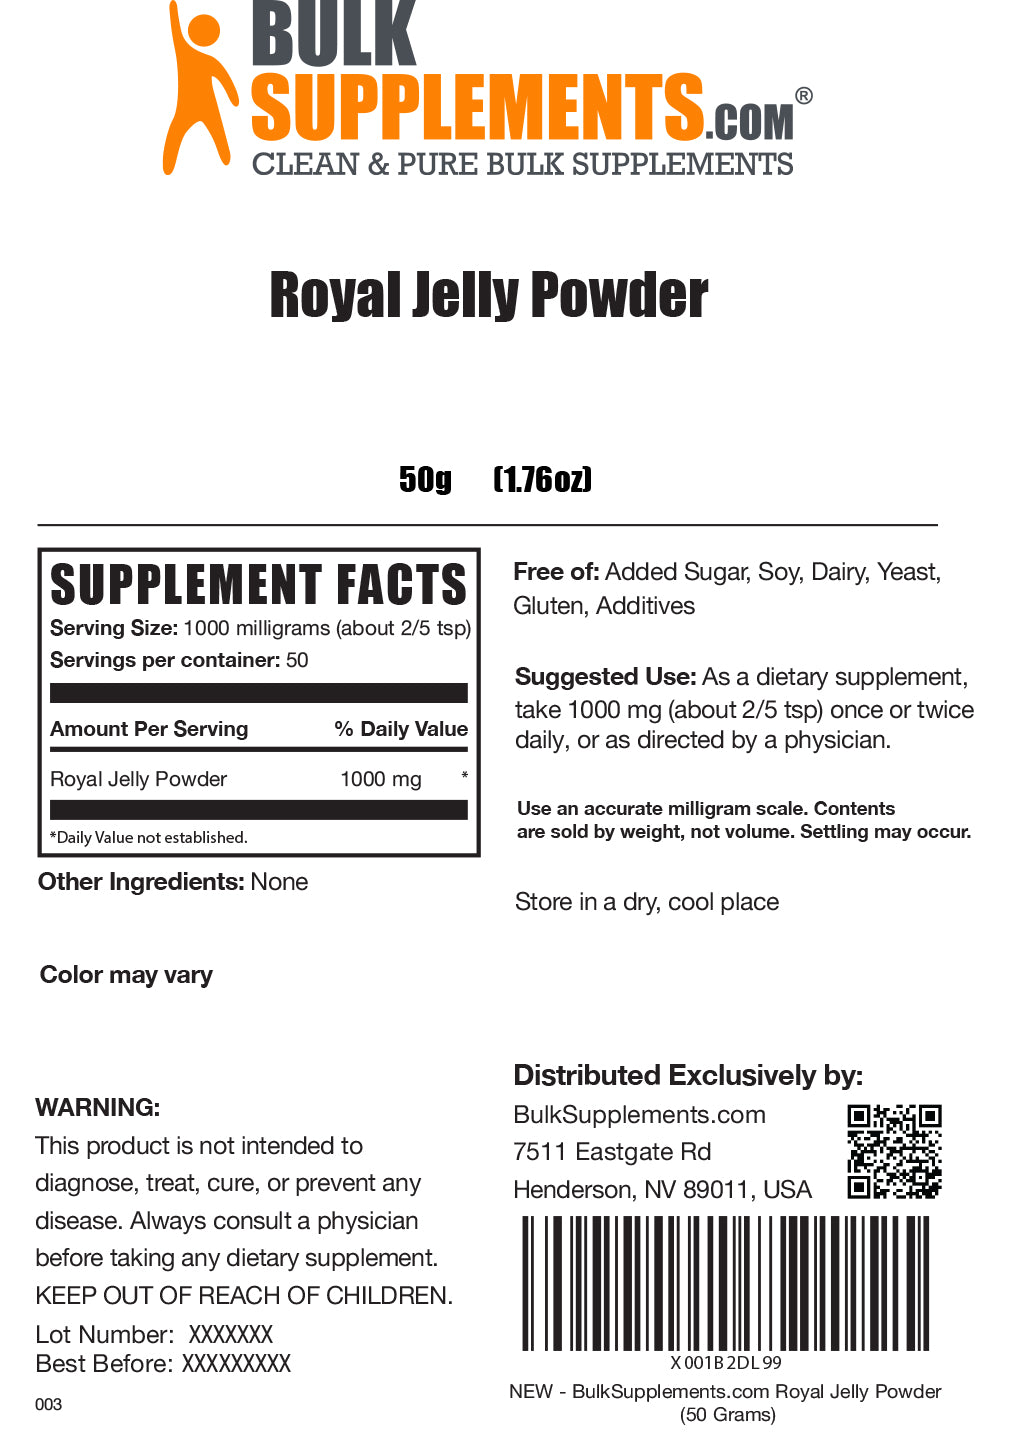  Royal Jelly Powder Label 50g